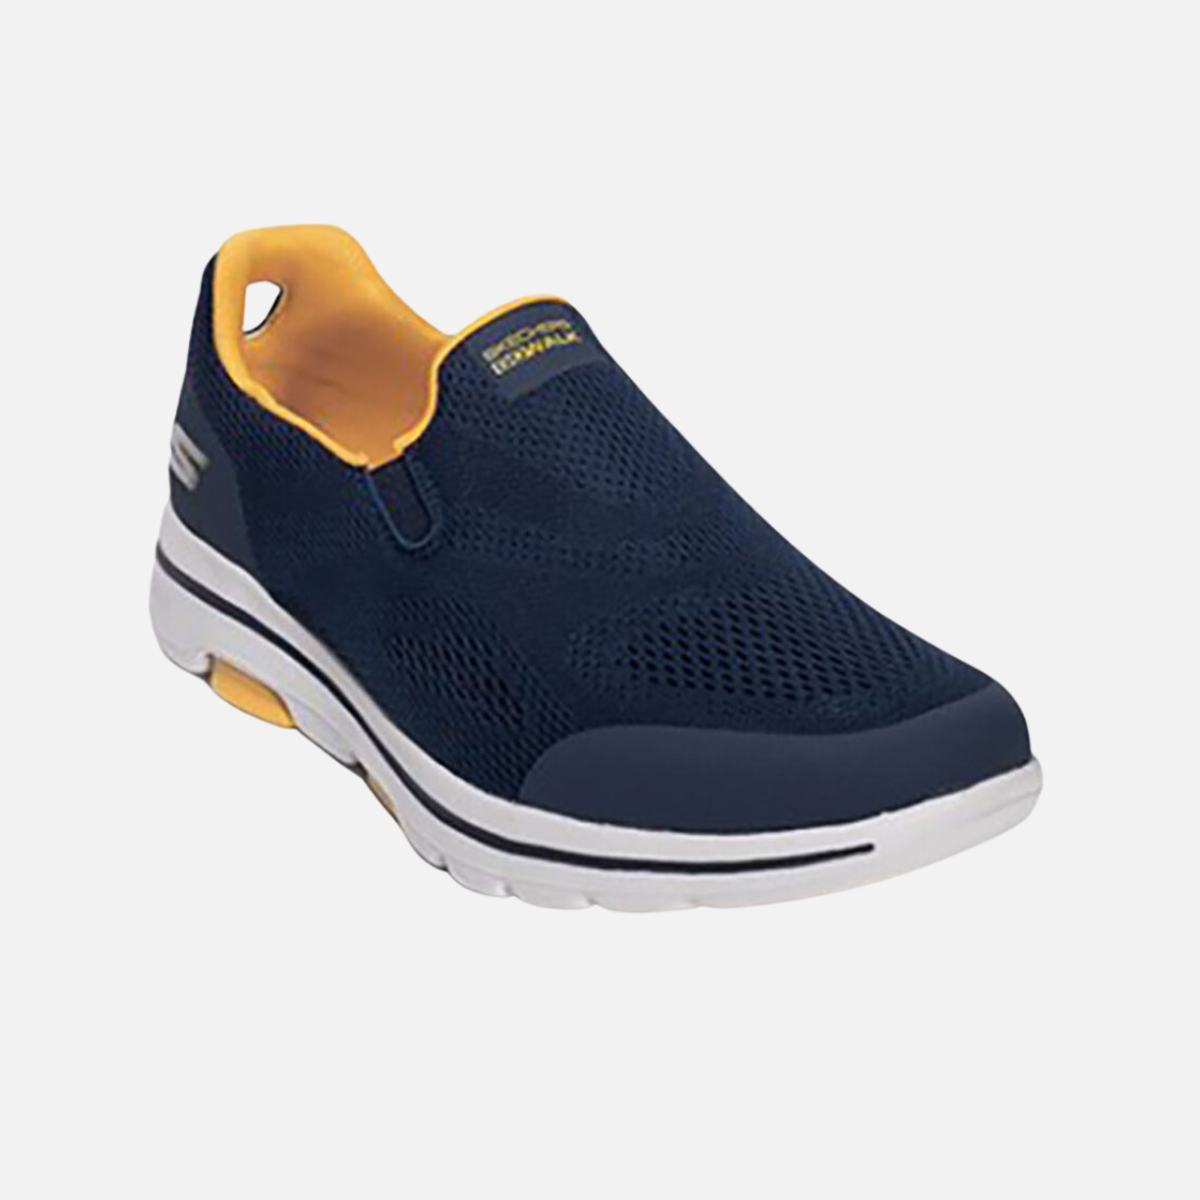 Skechers Go walk 5 Quadplex Men's Walking Shoes -Navy/Yellow